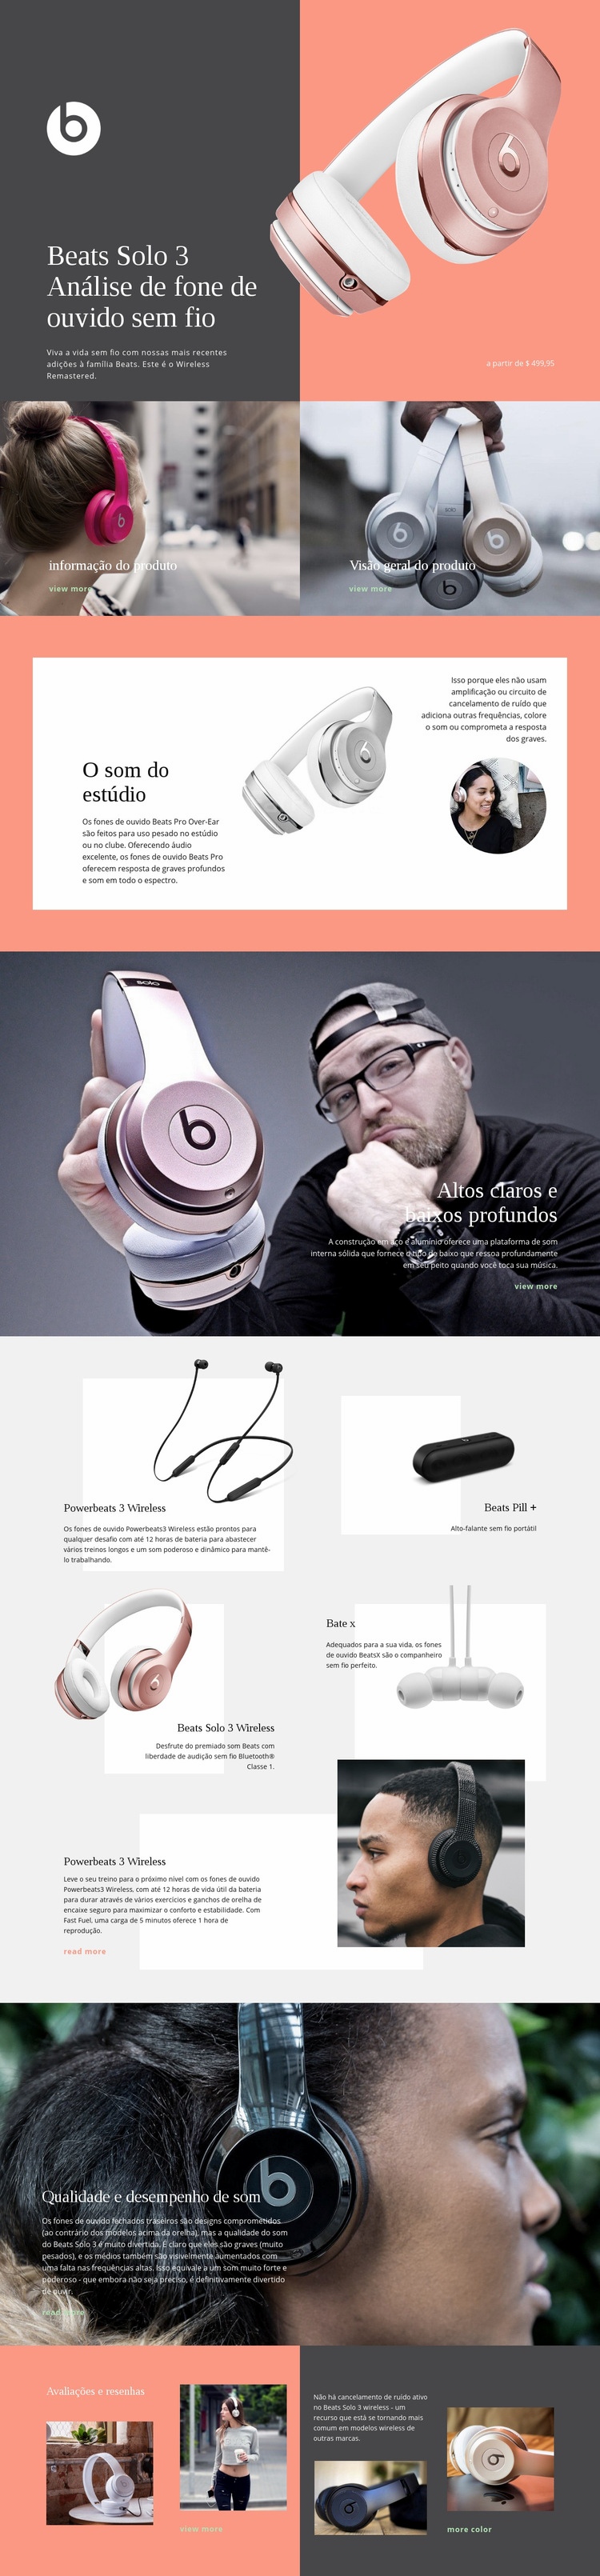 Beats Wireless Design do site